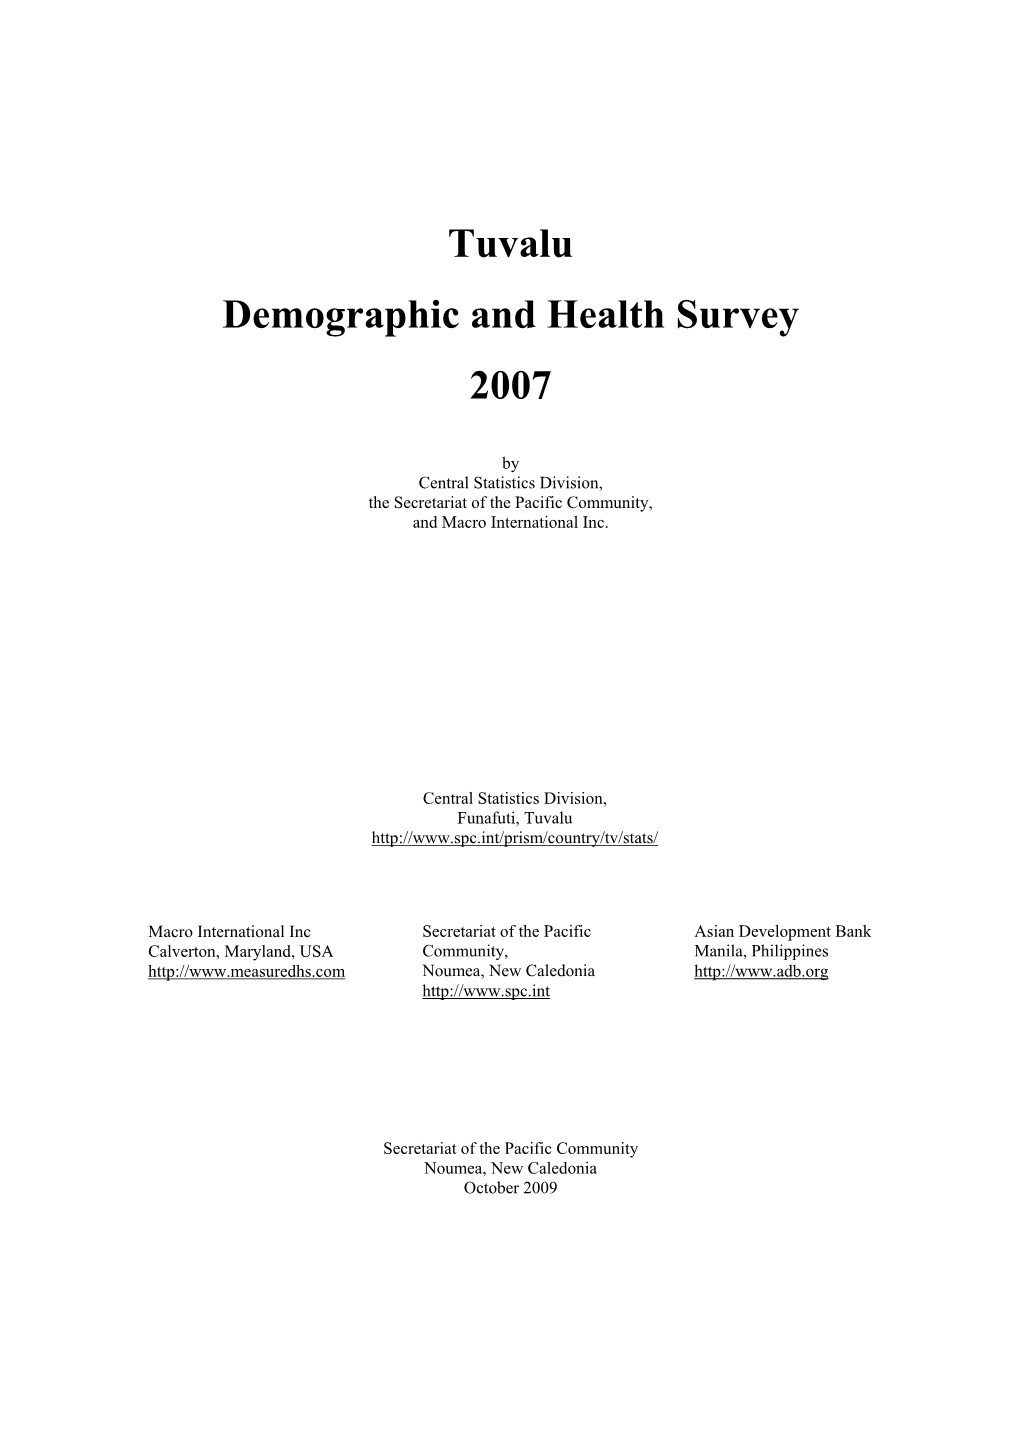 Tuvalu Demographic and Health Survey 2007